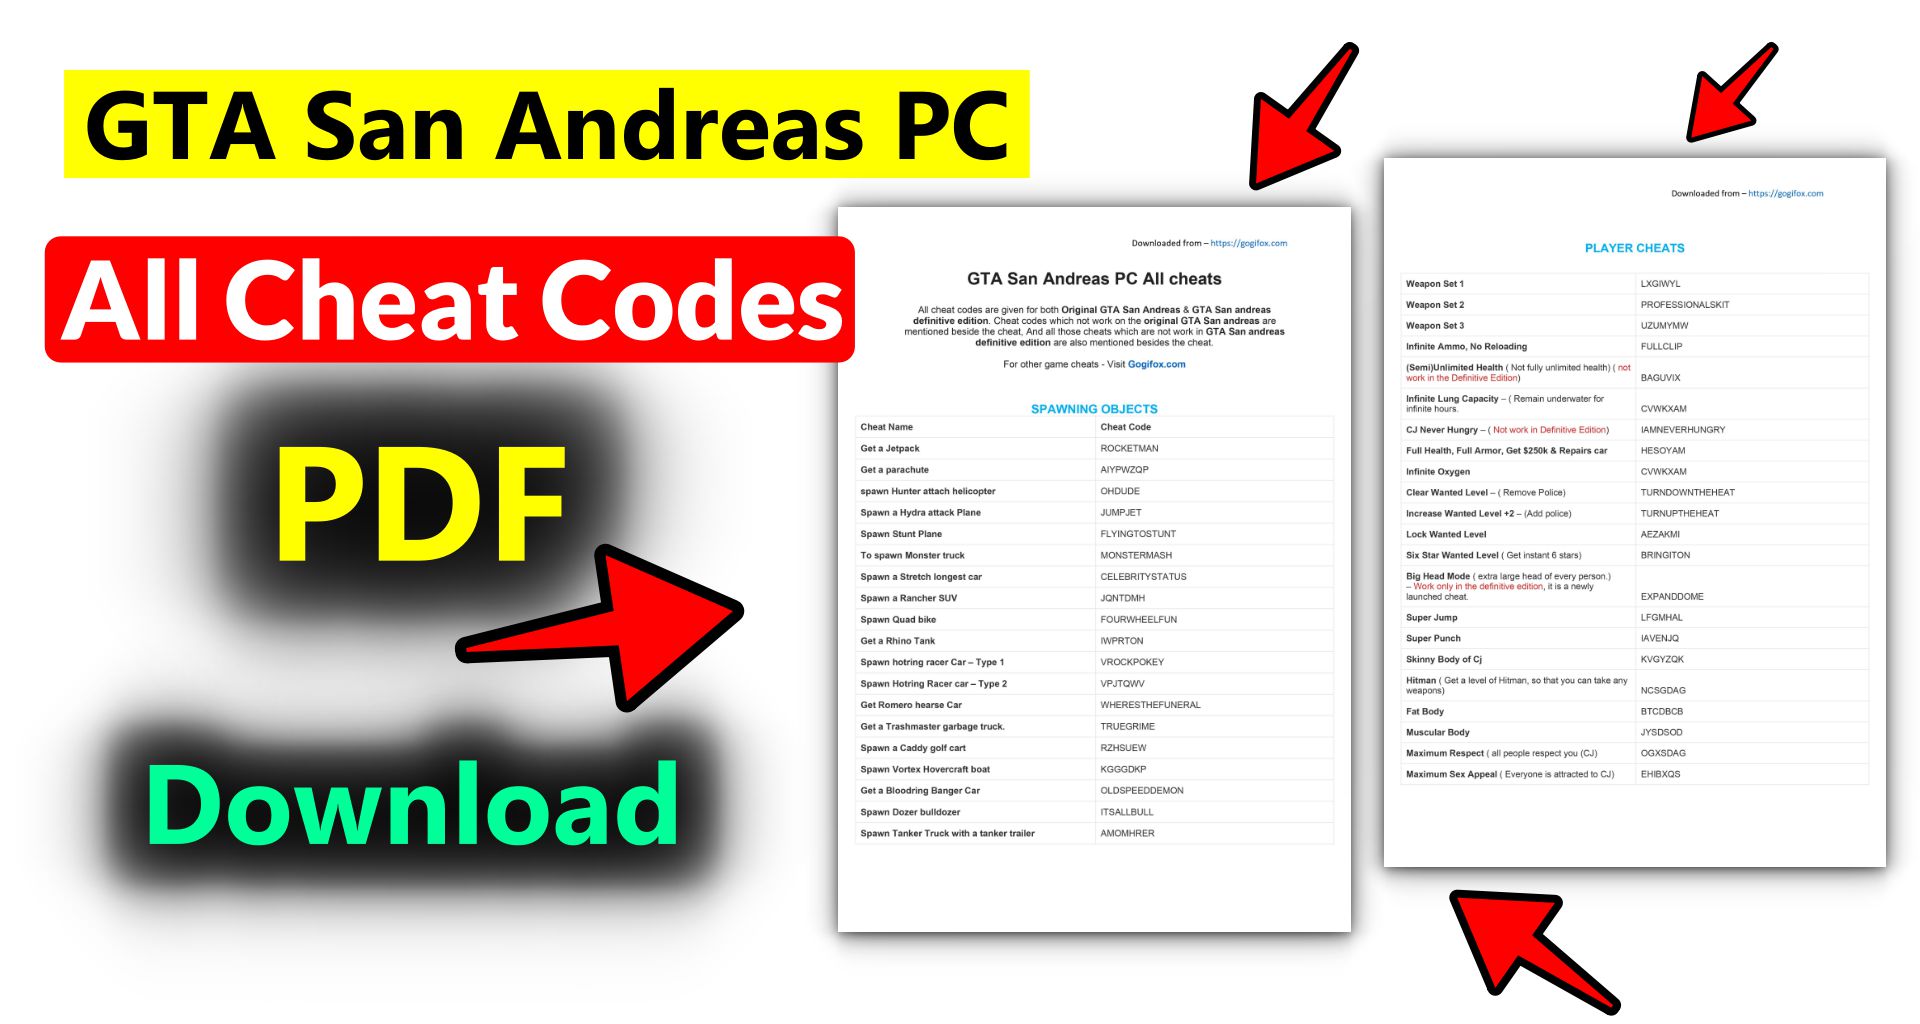 GTA San Andreas PC all Cheat Codes PDF download